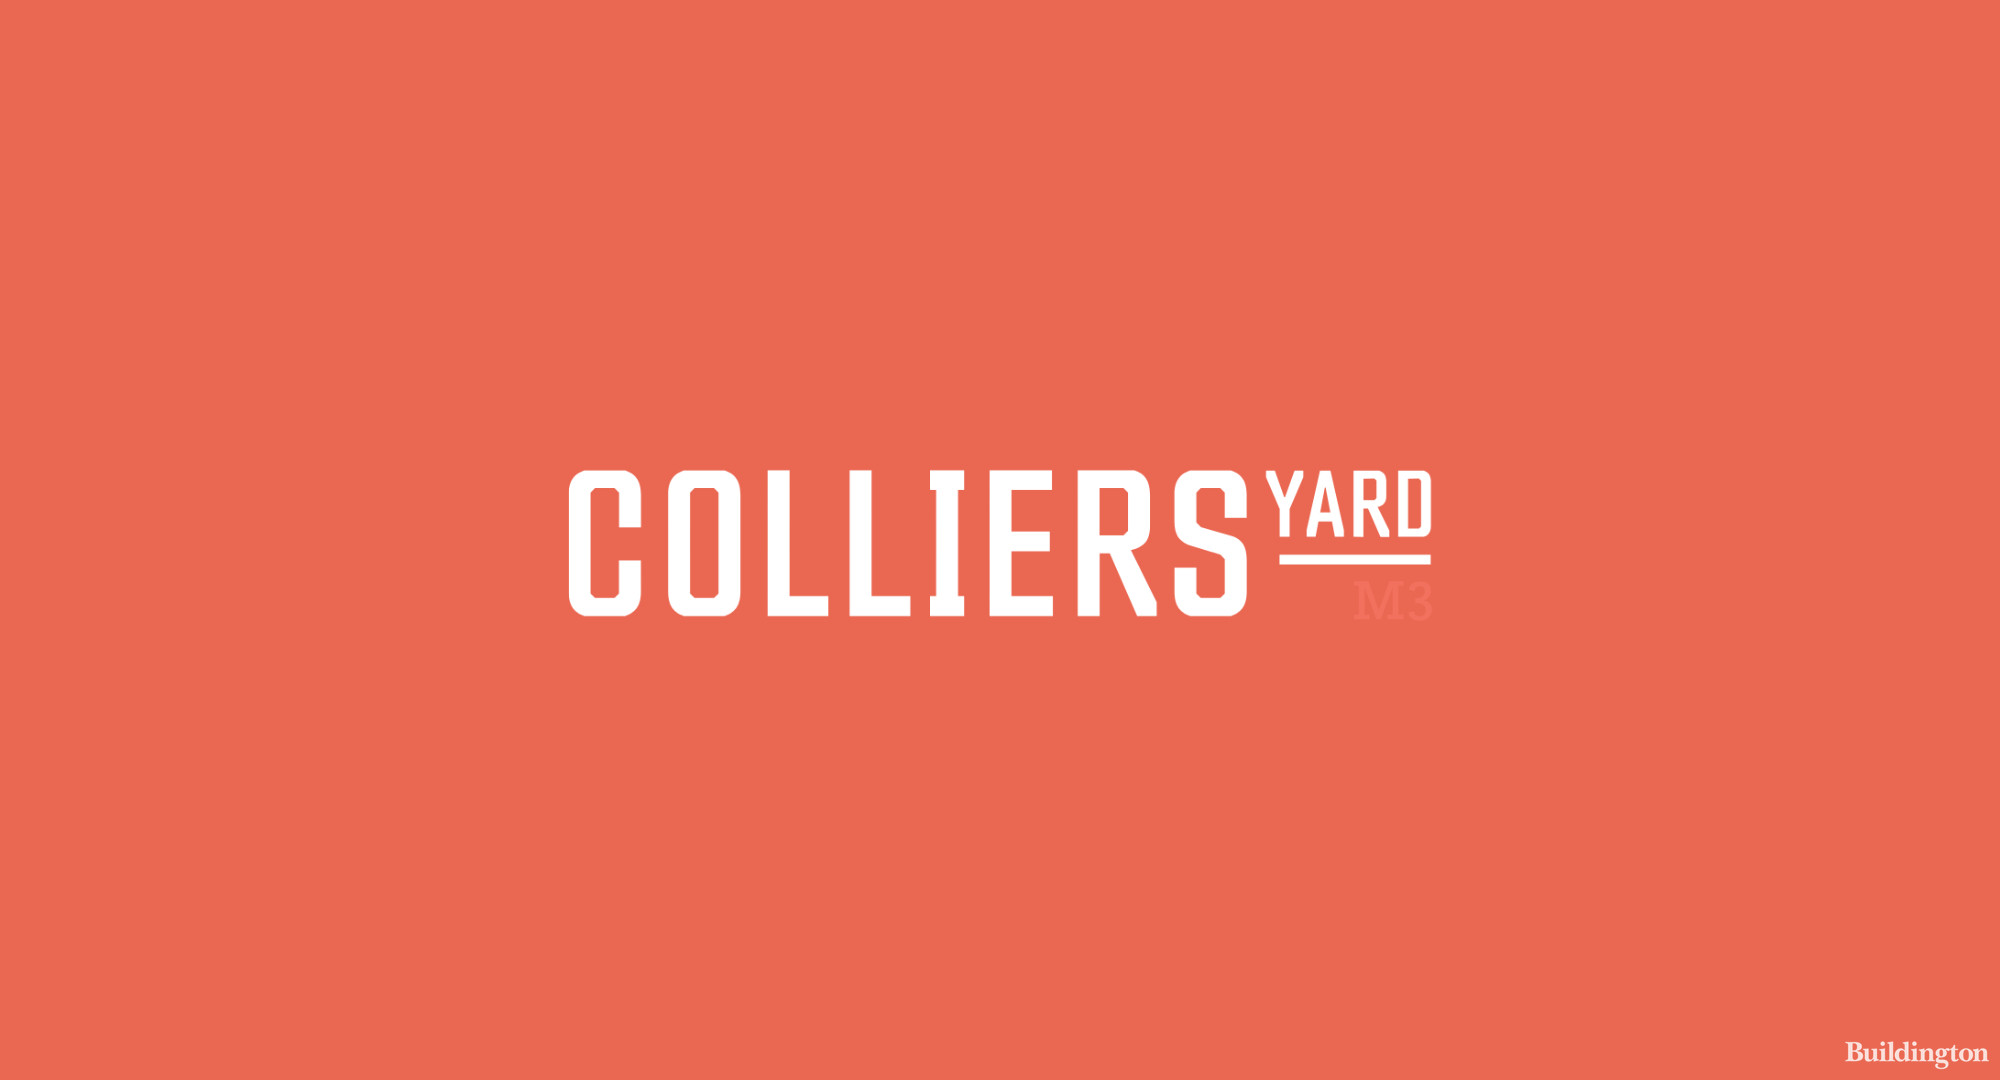 Colliers Yard M3 development logo cover